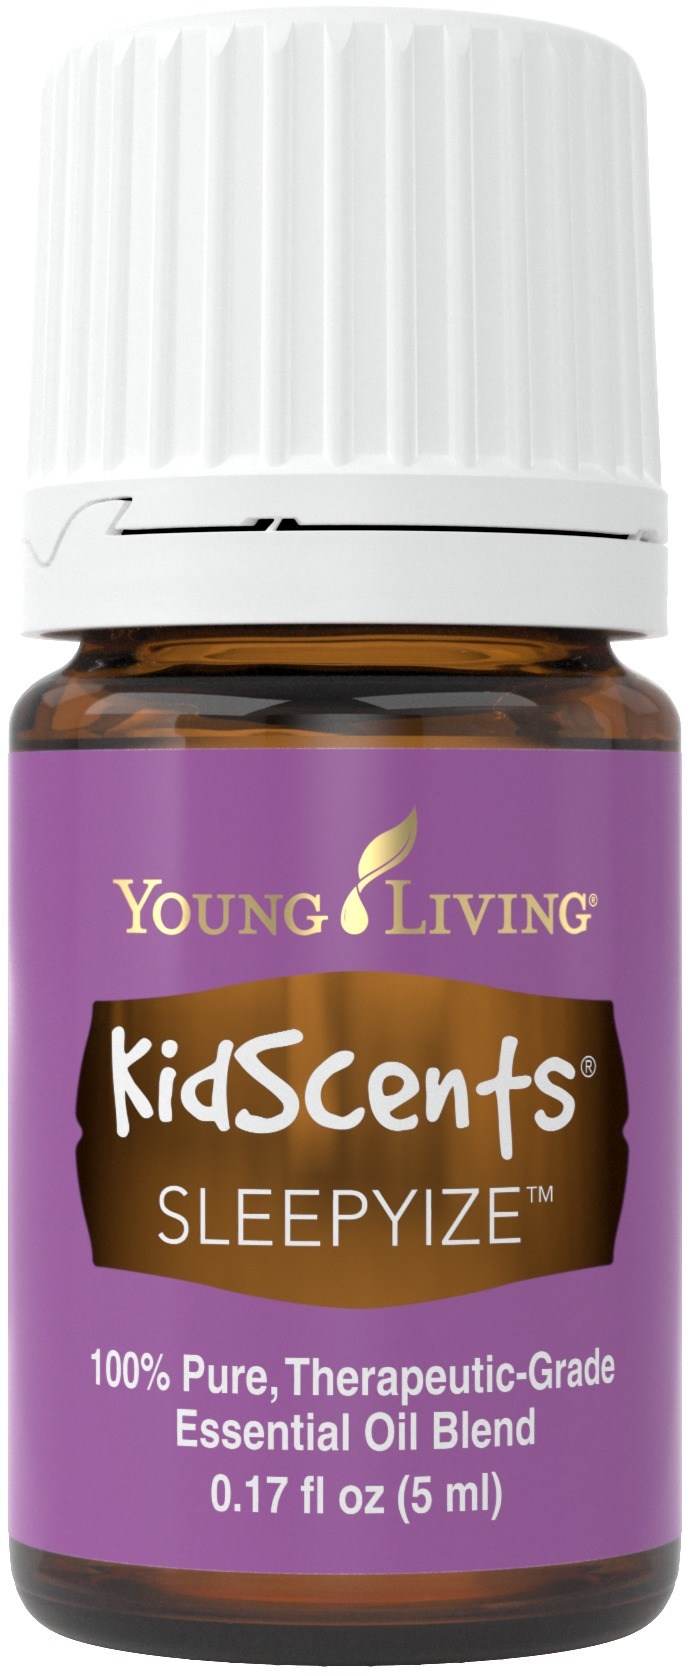 Kidscents Sleepyize Essential Oil Blend for Kids